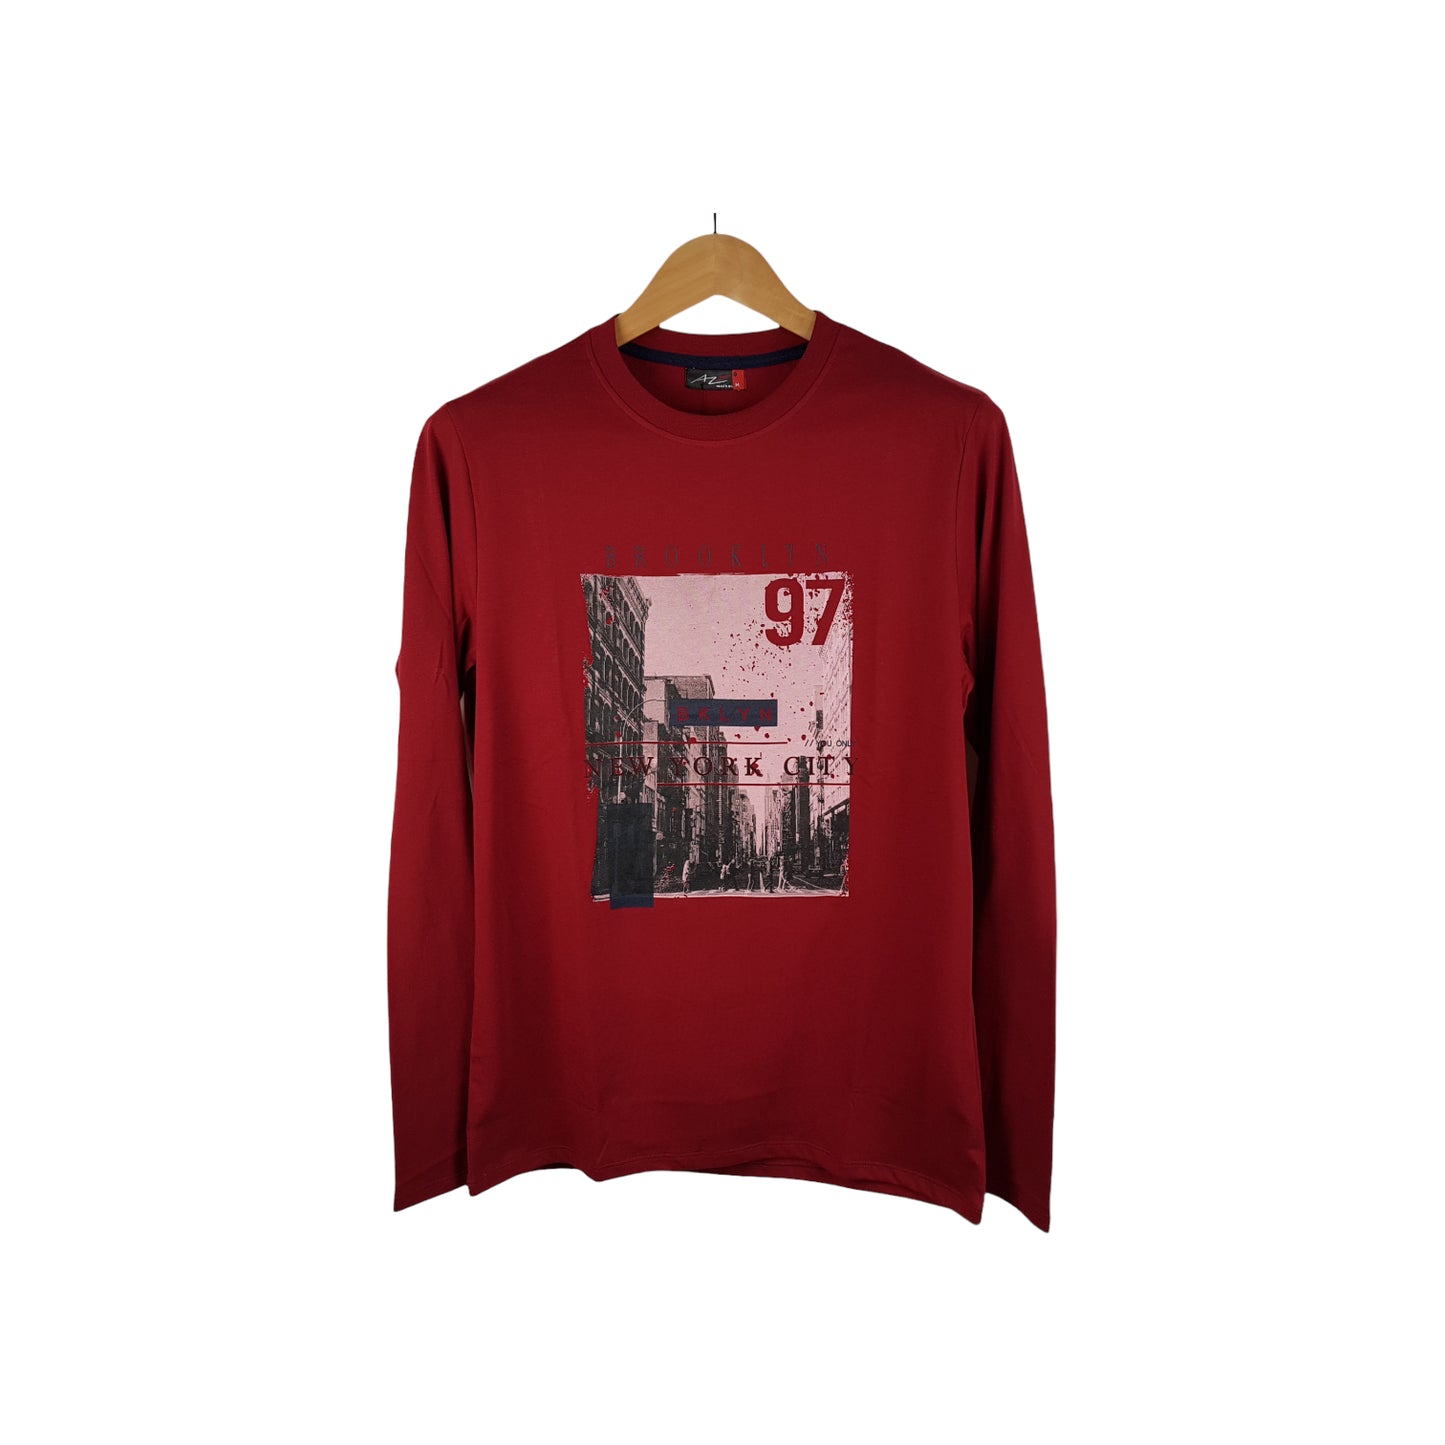 Bordeaux Brooklyn 97 sweatshirt